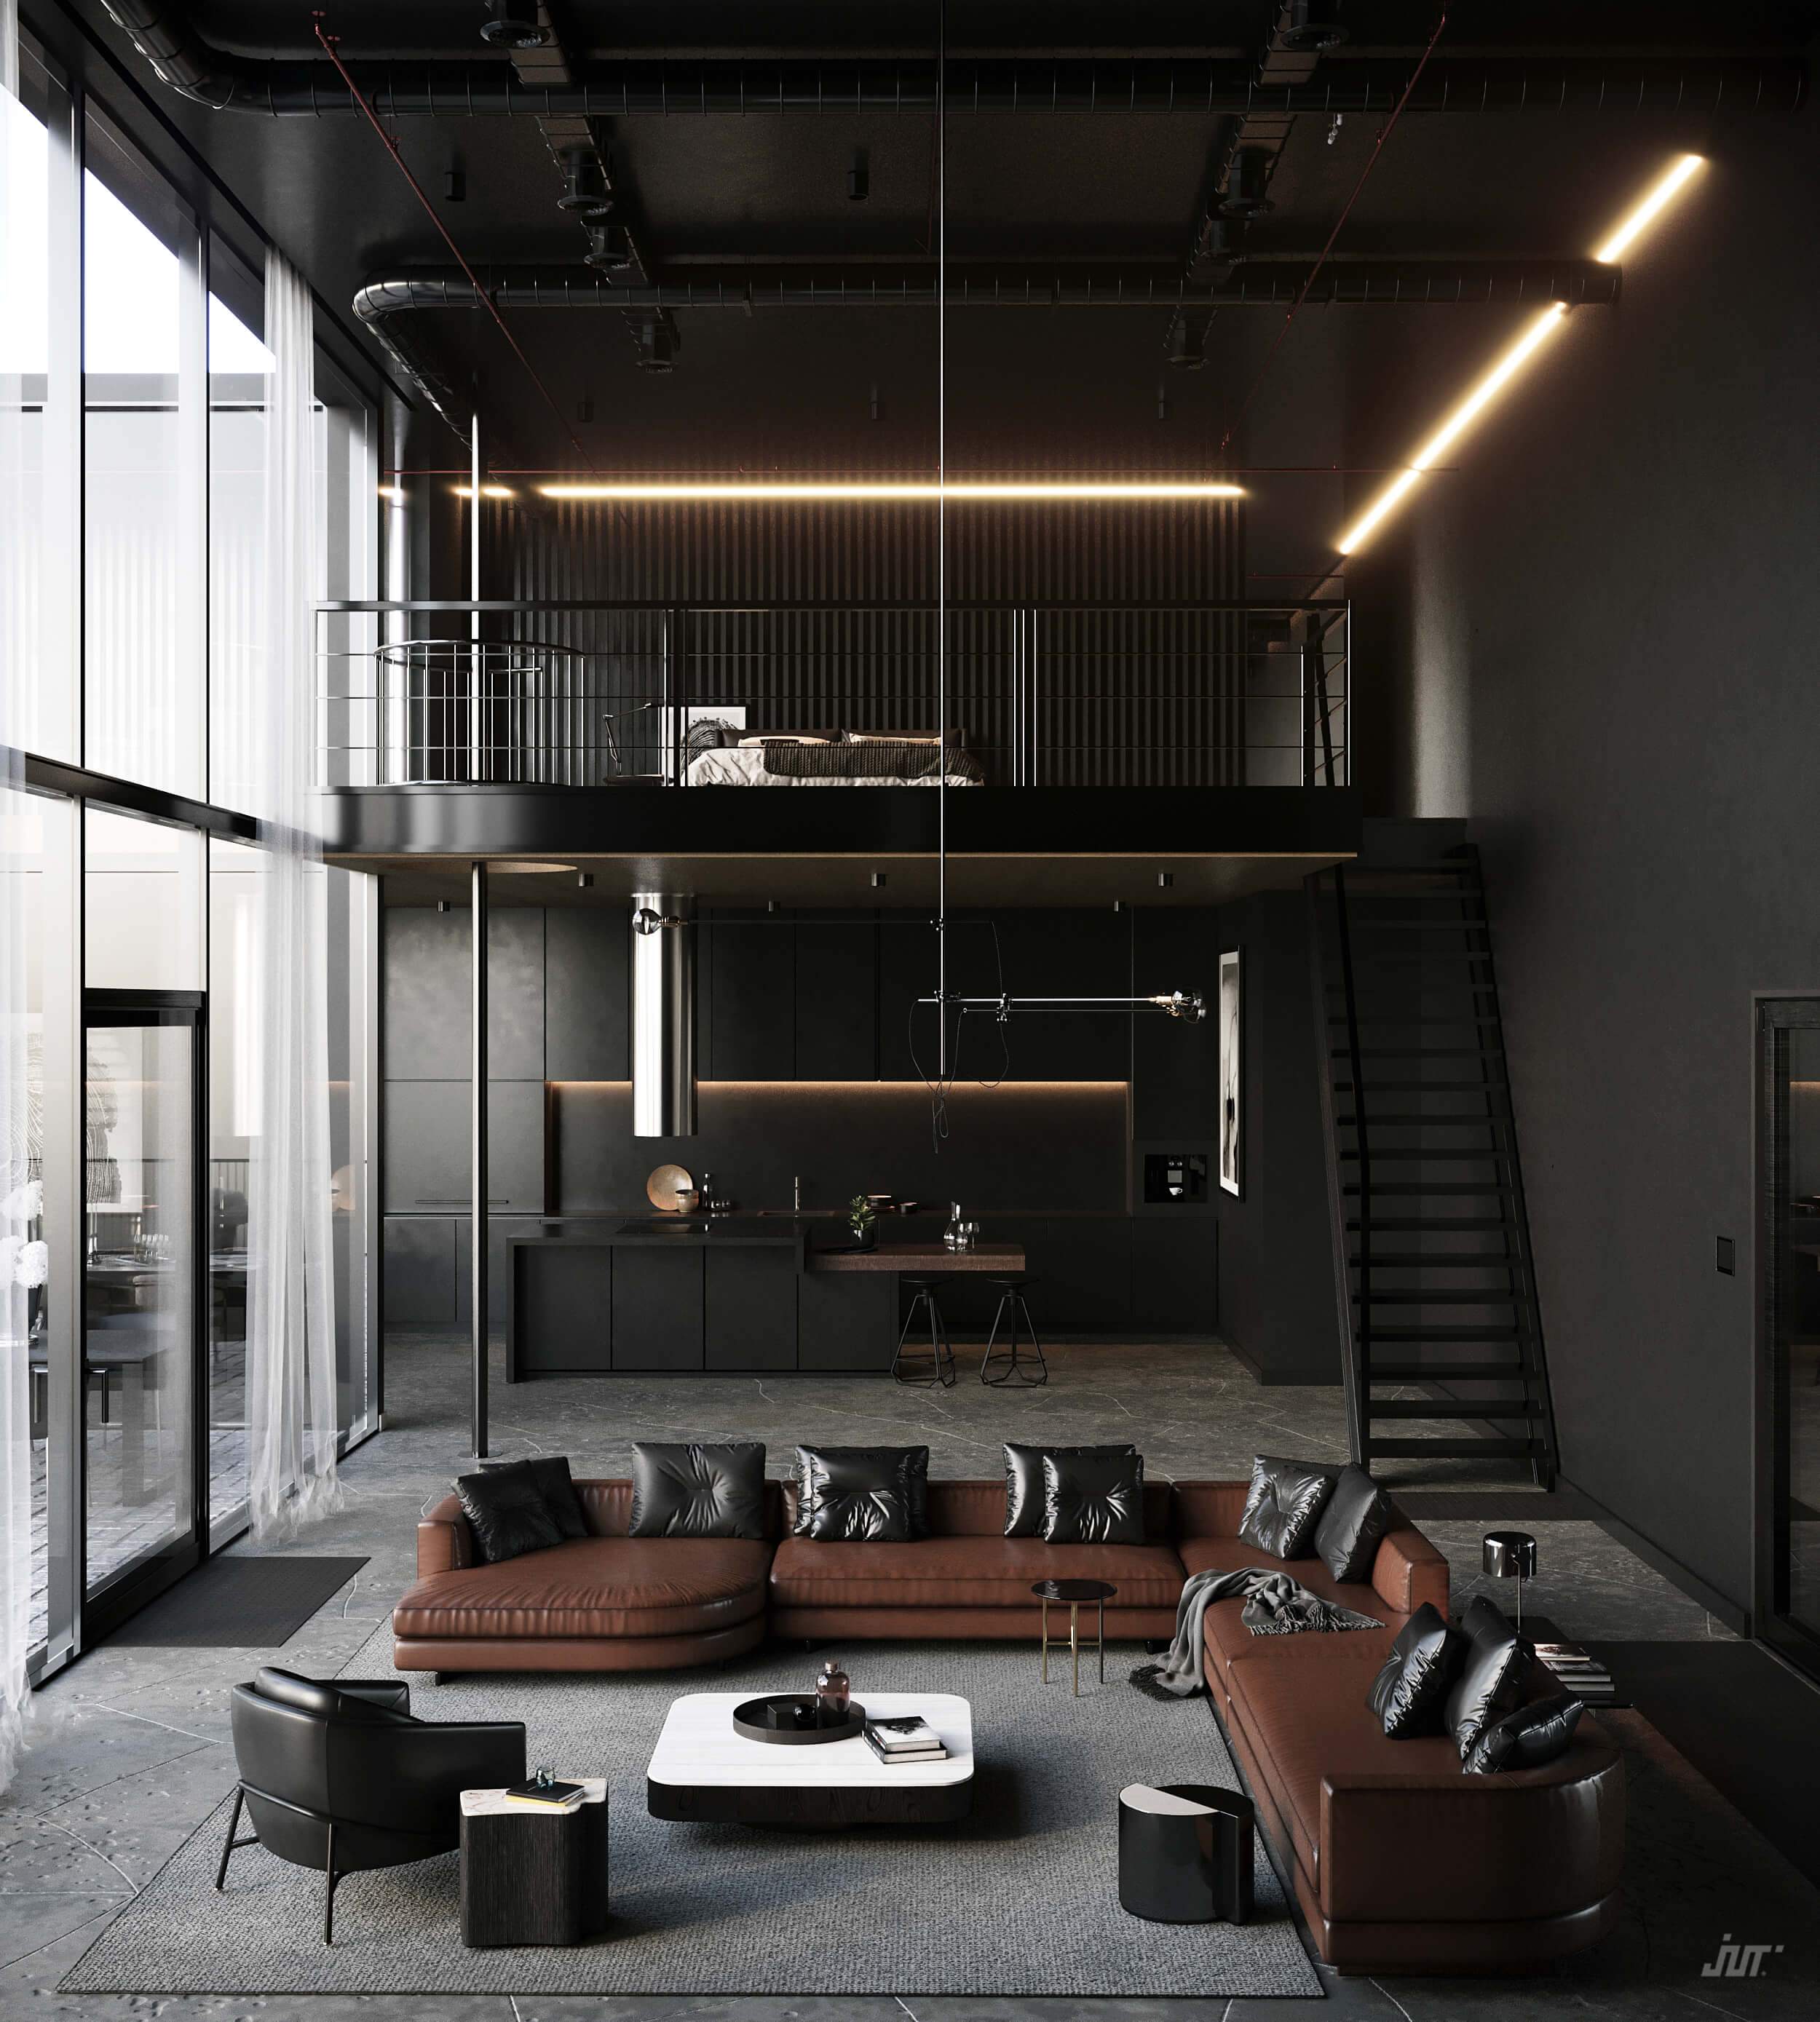 The Loft Apartment By Jeffrey Tanate